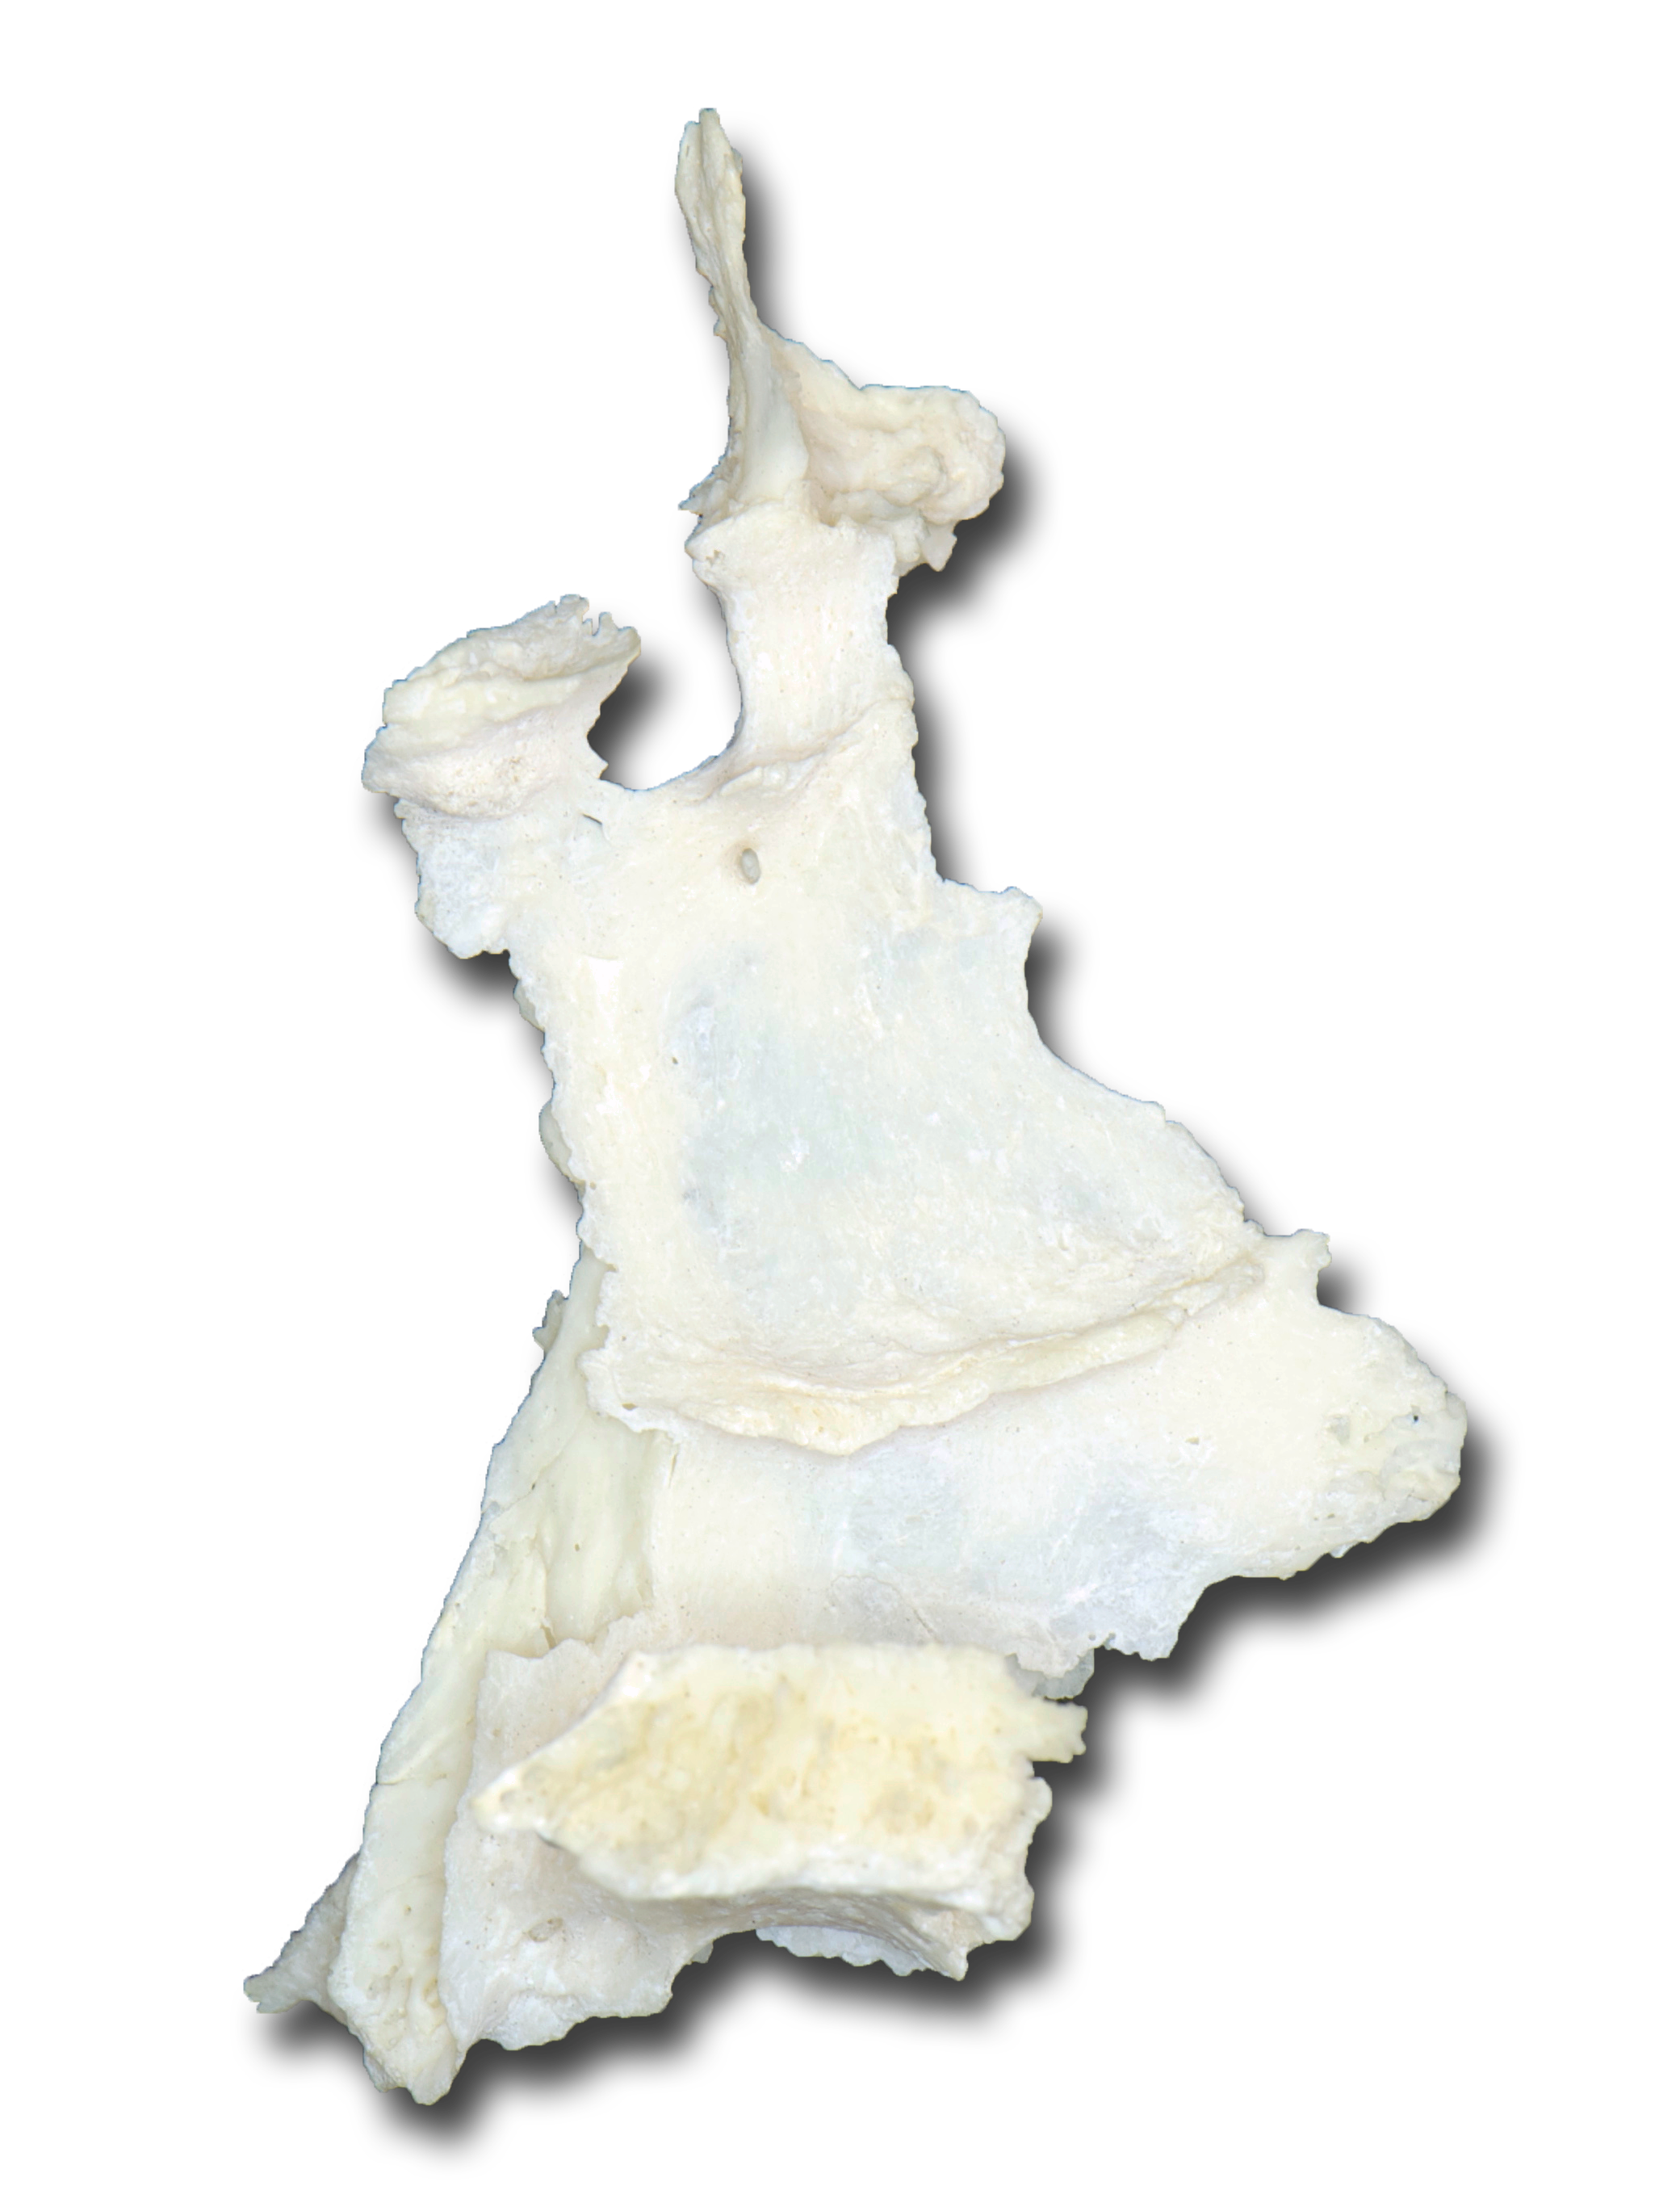 Palatine Bone - Medial View